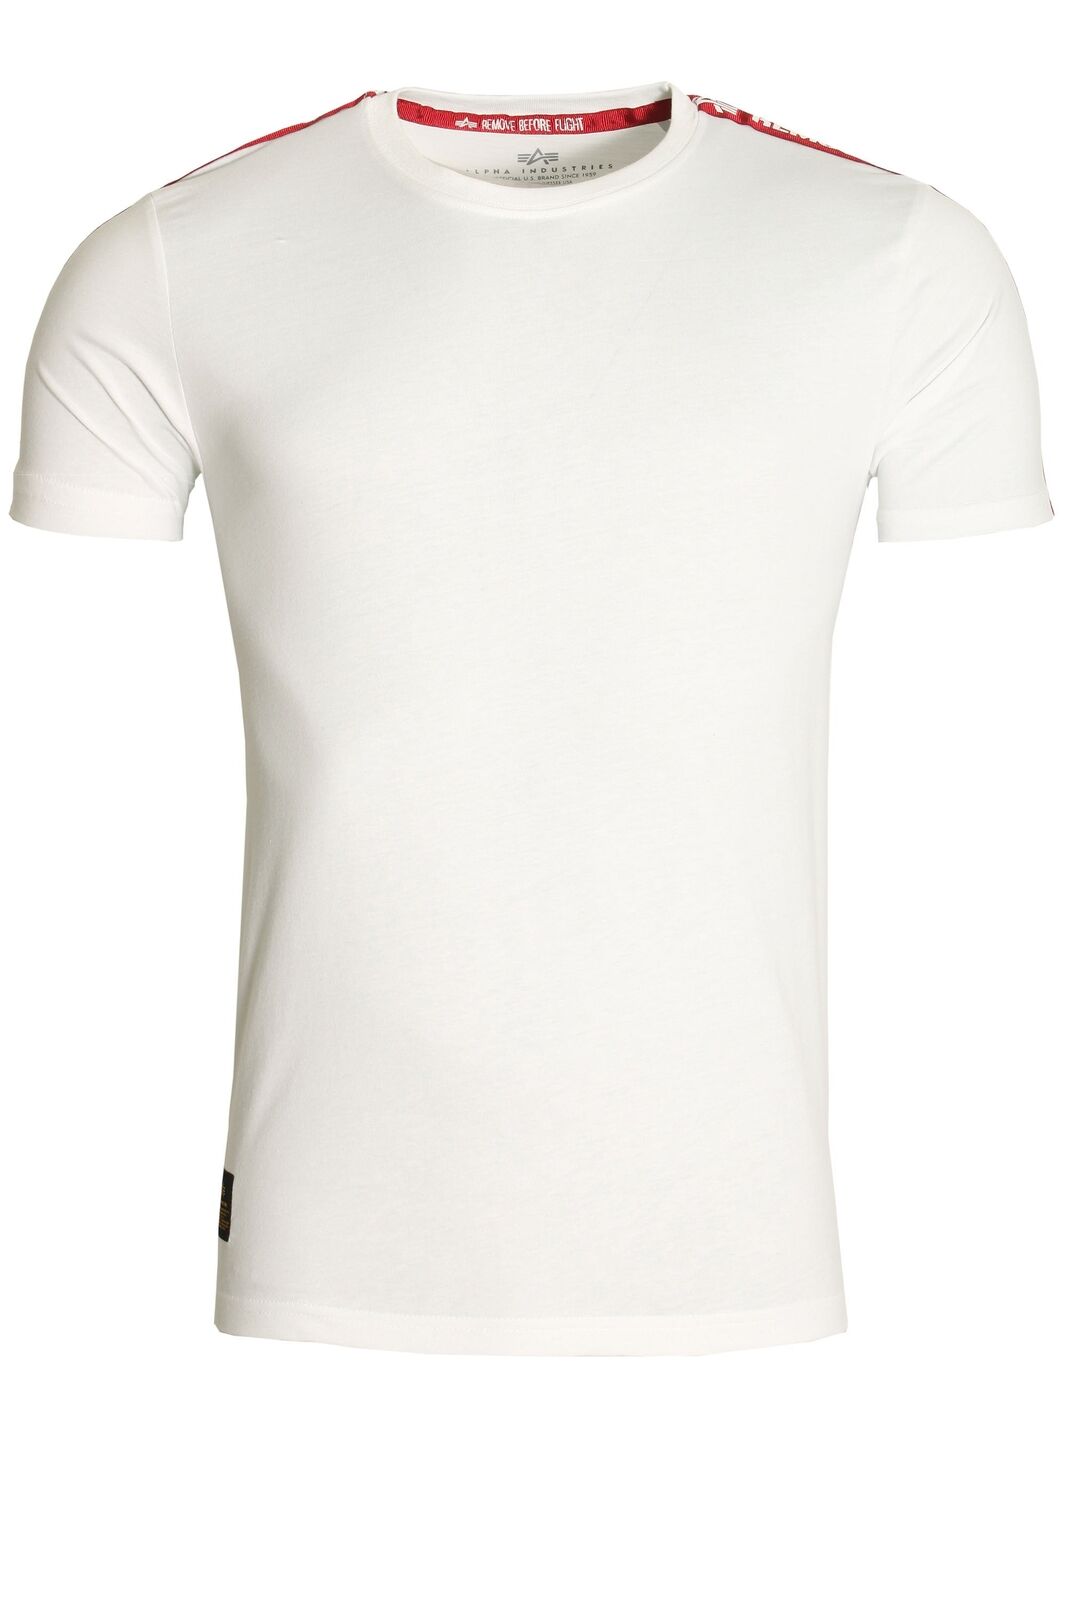 Mens T-Shirt ALPHA INDUSTRIES RBF Taped t-shirt White | eBay